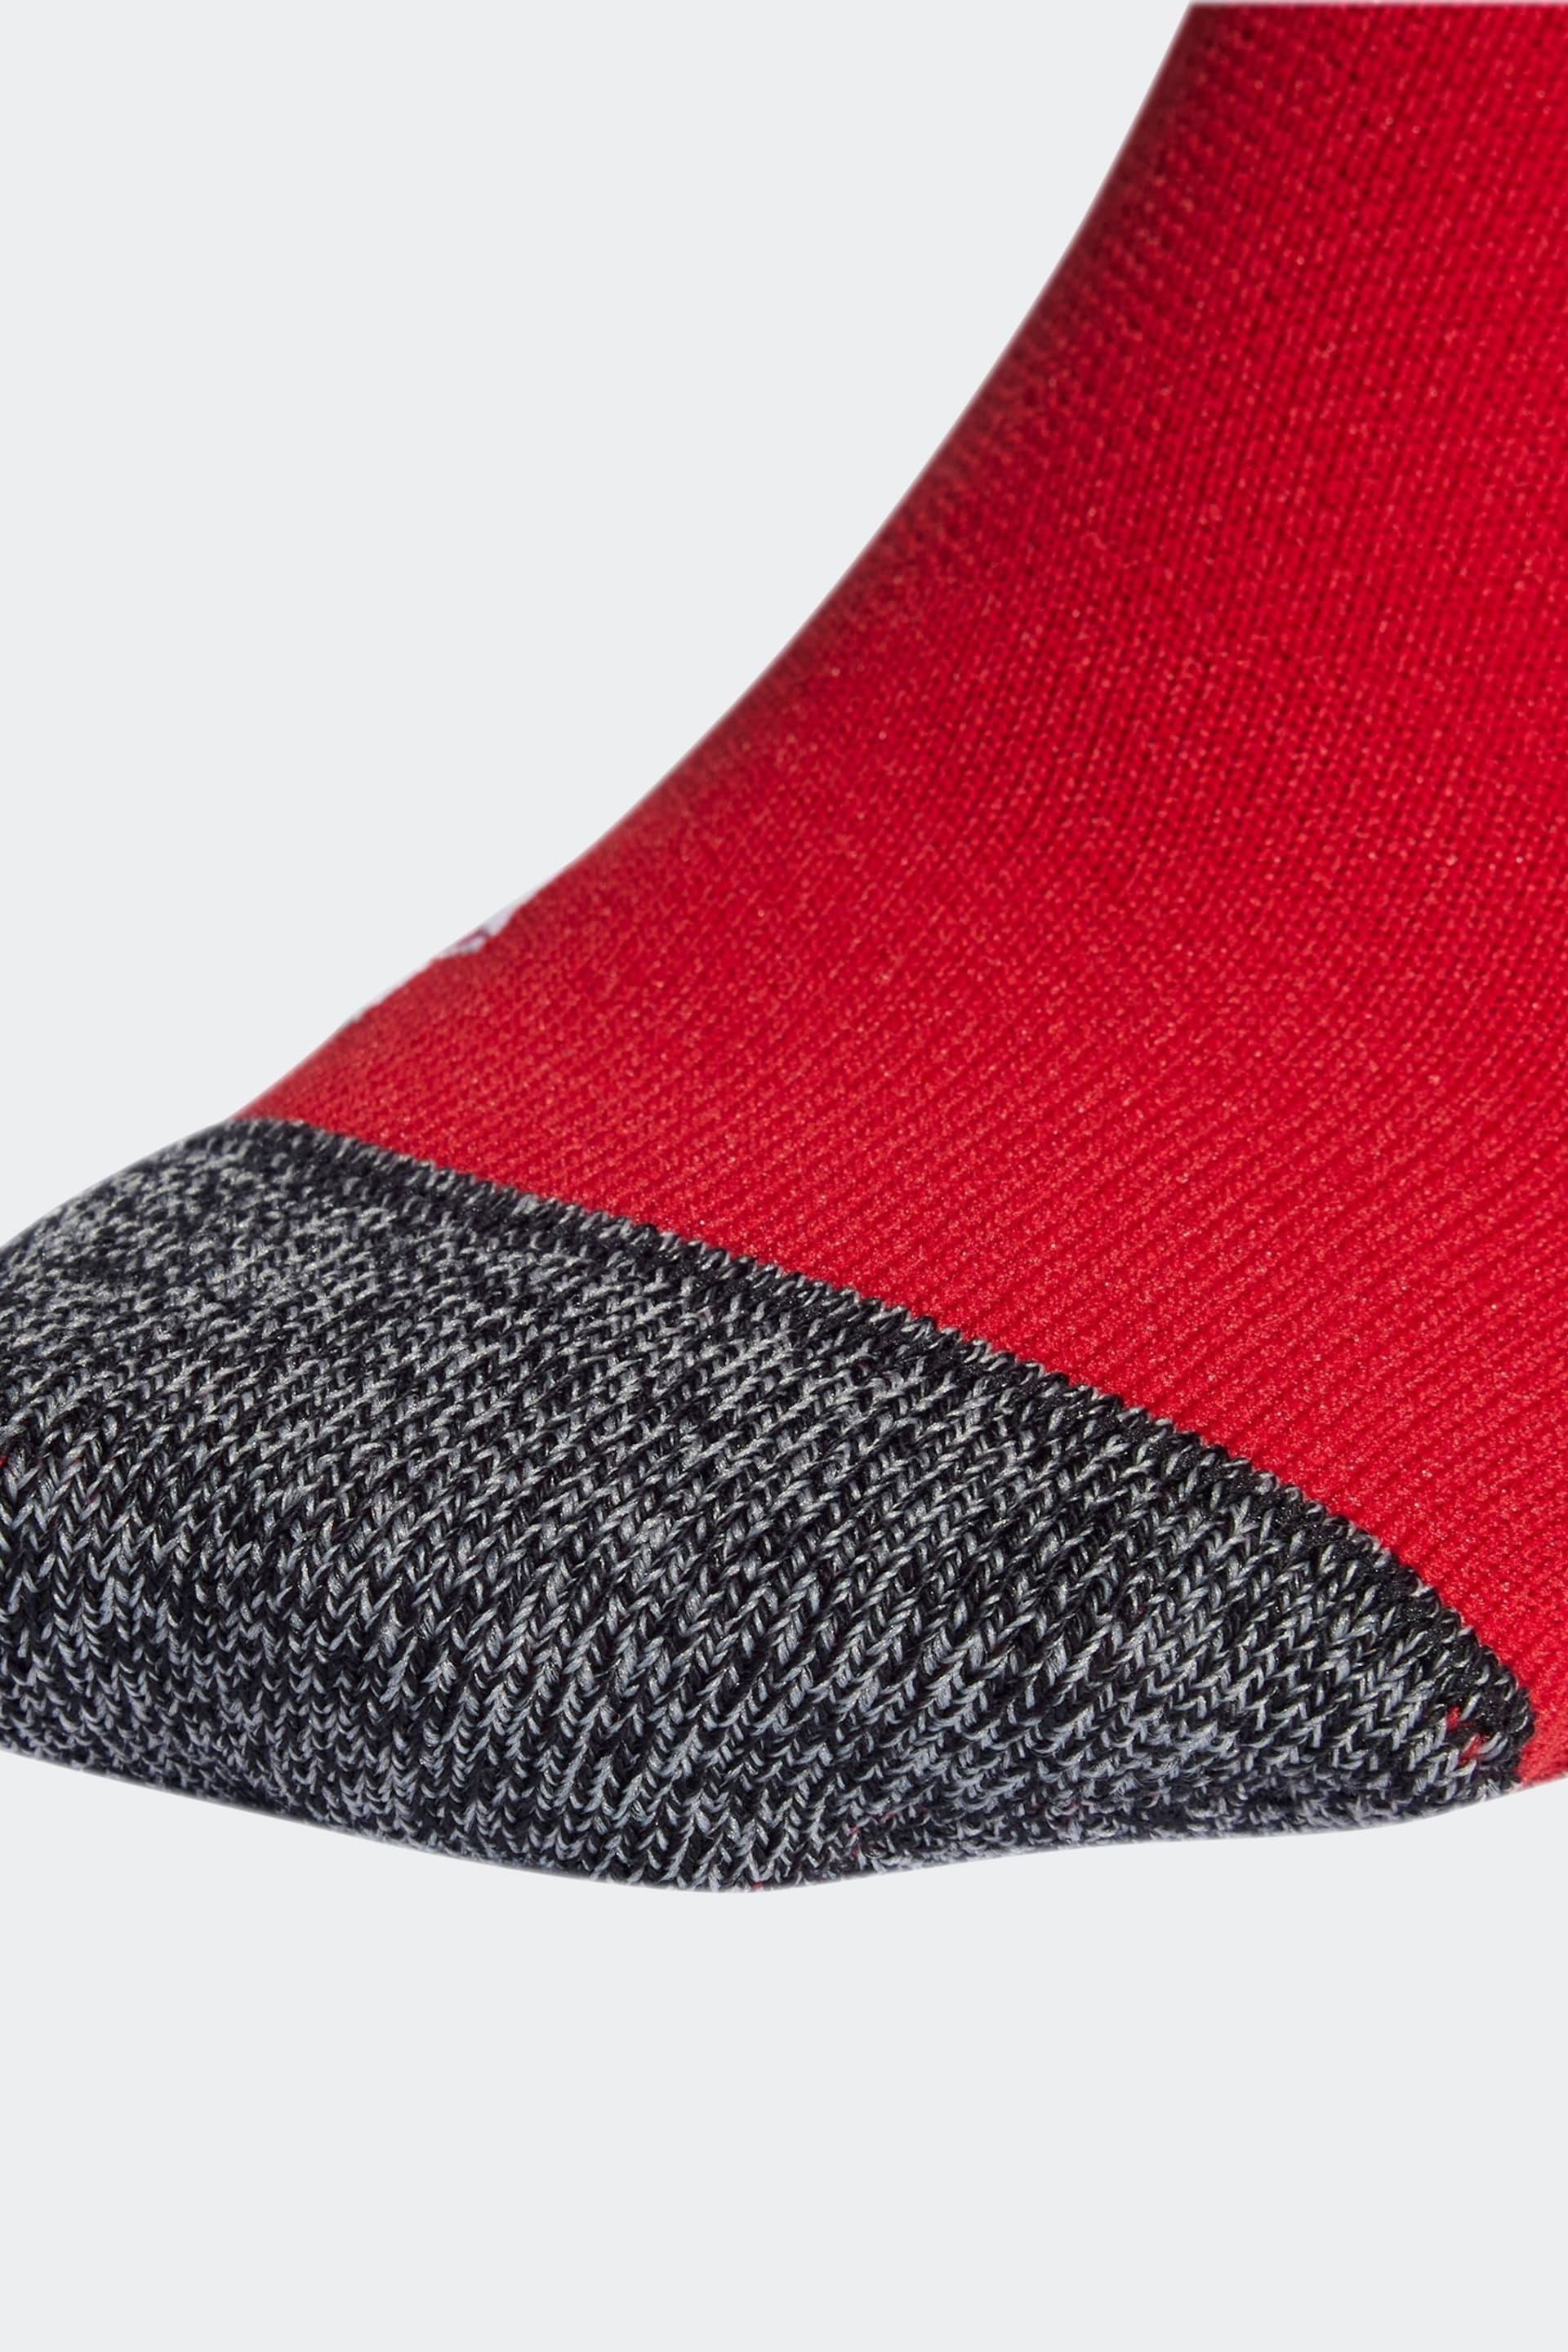 adidas Red Performance Adi 23 Socks - Image 2 of 3